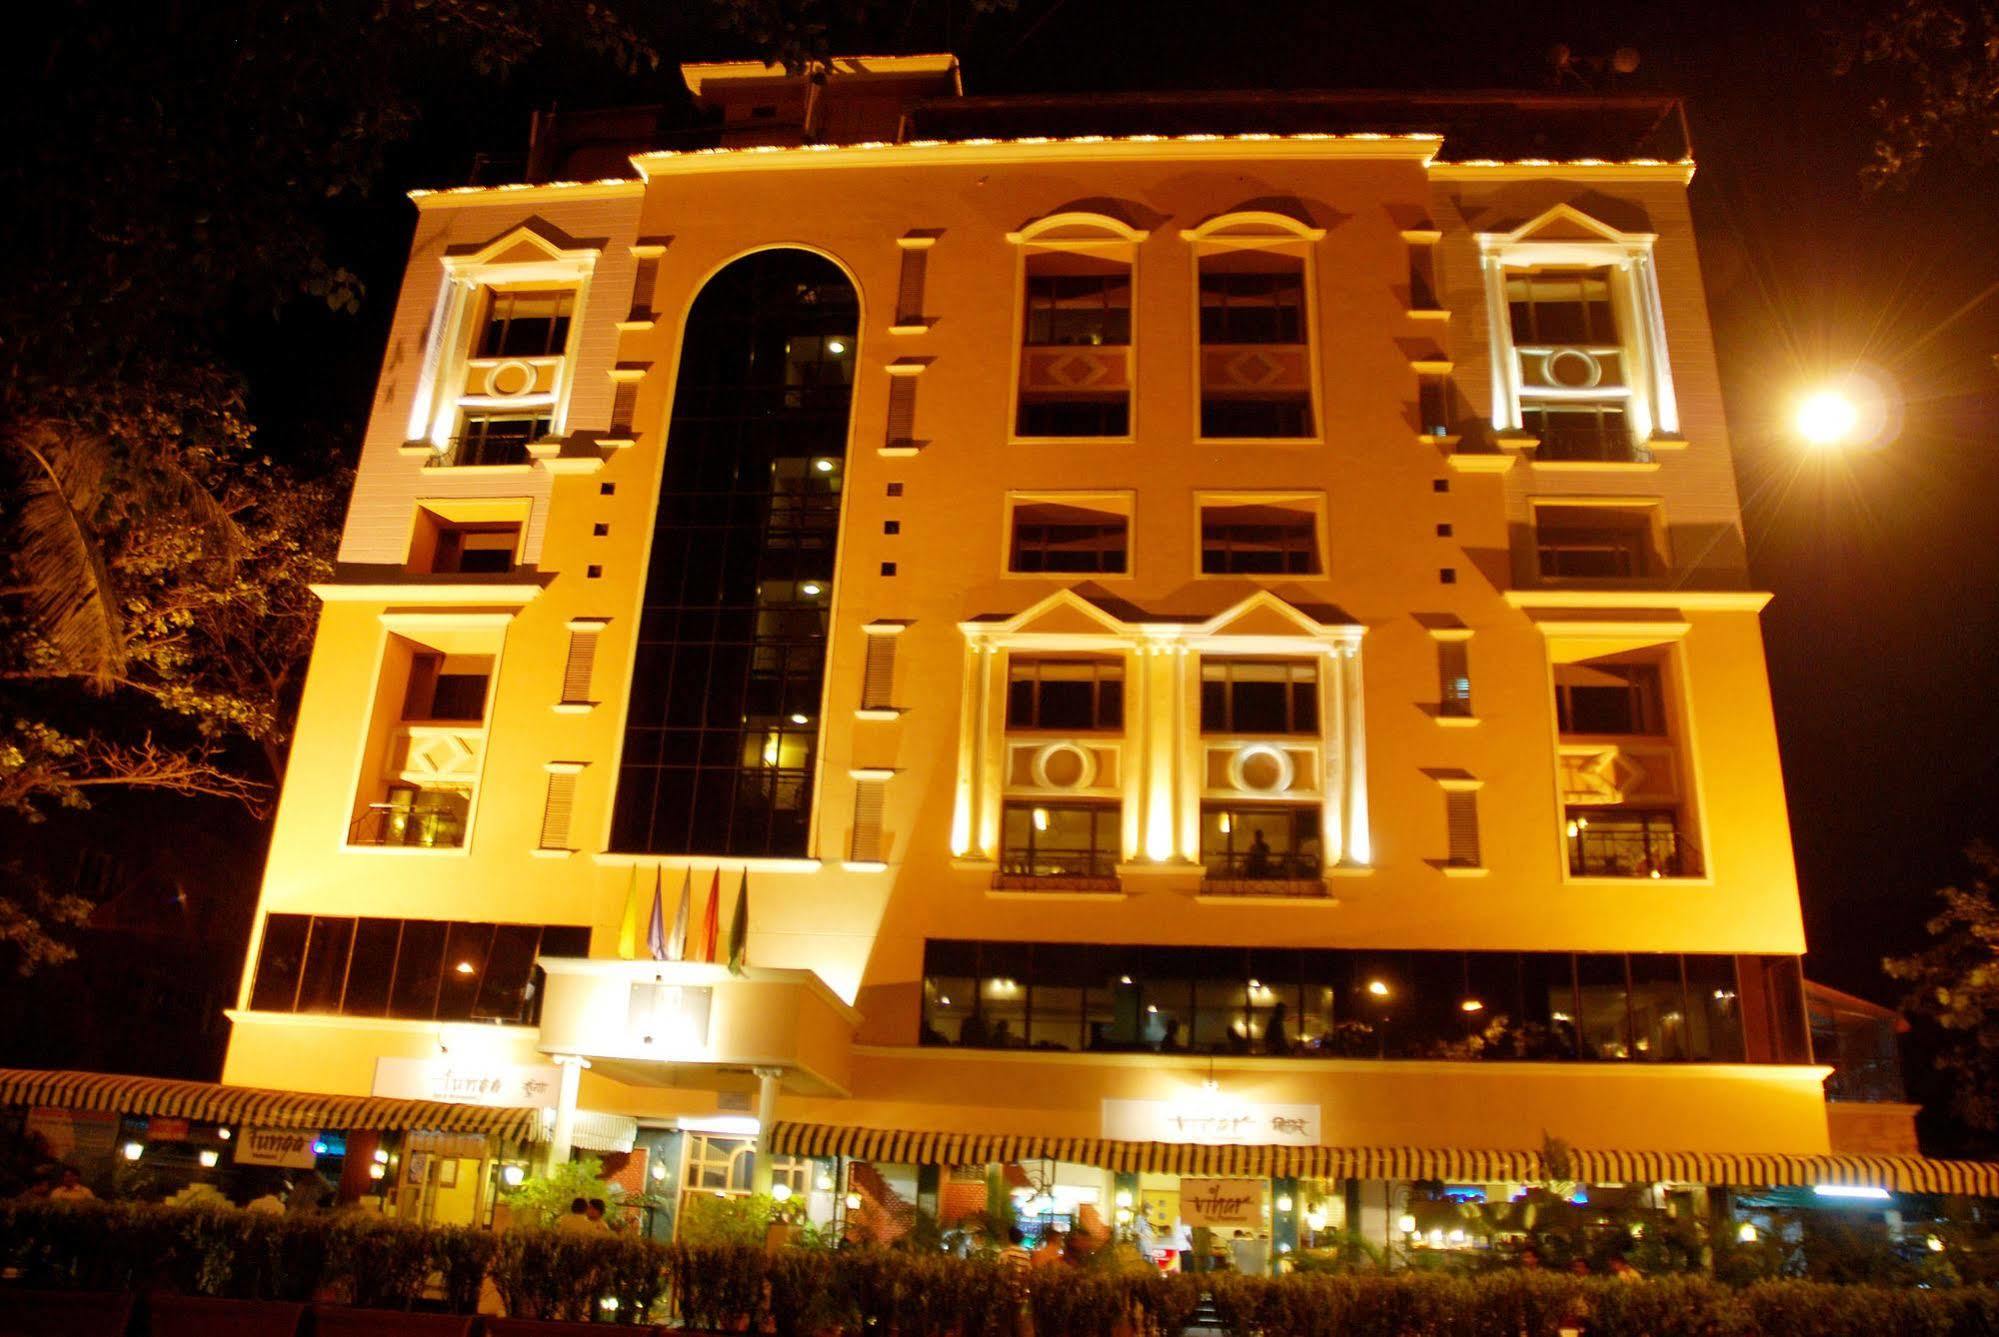 The International By Tunga Hotel Bombay Exterior foto